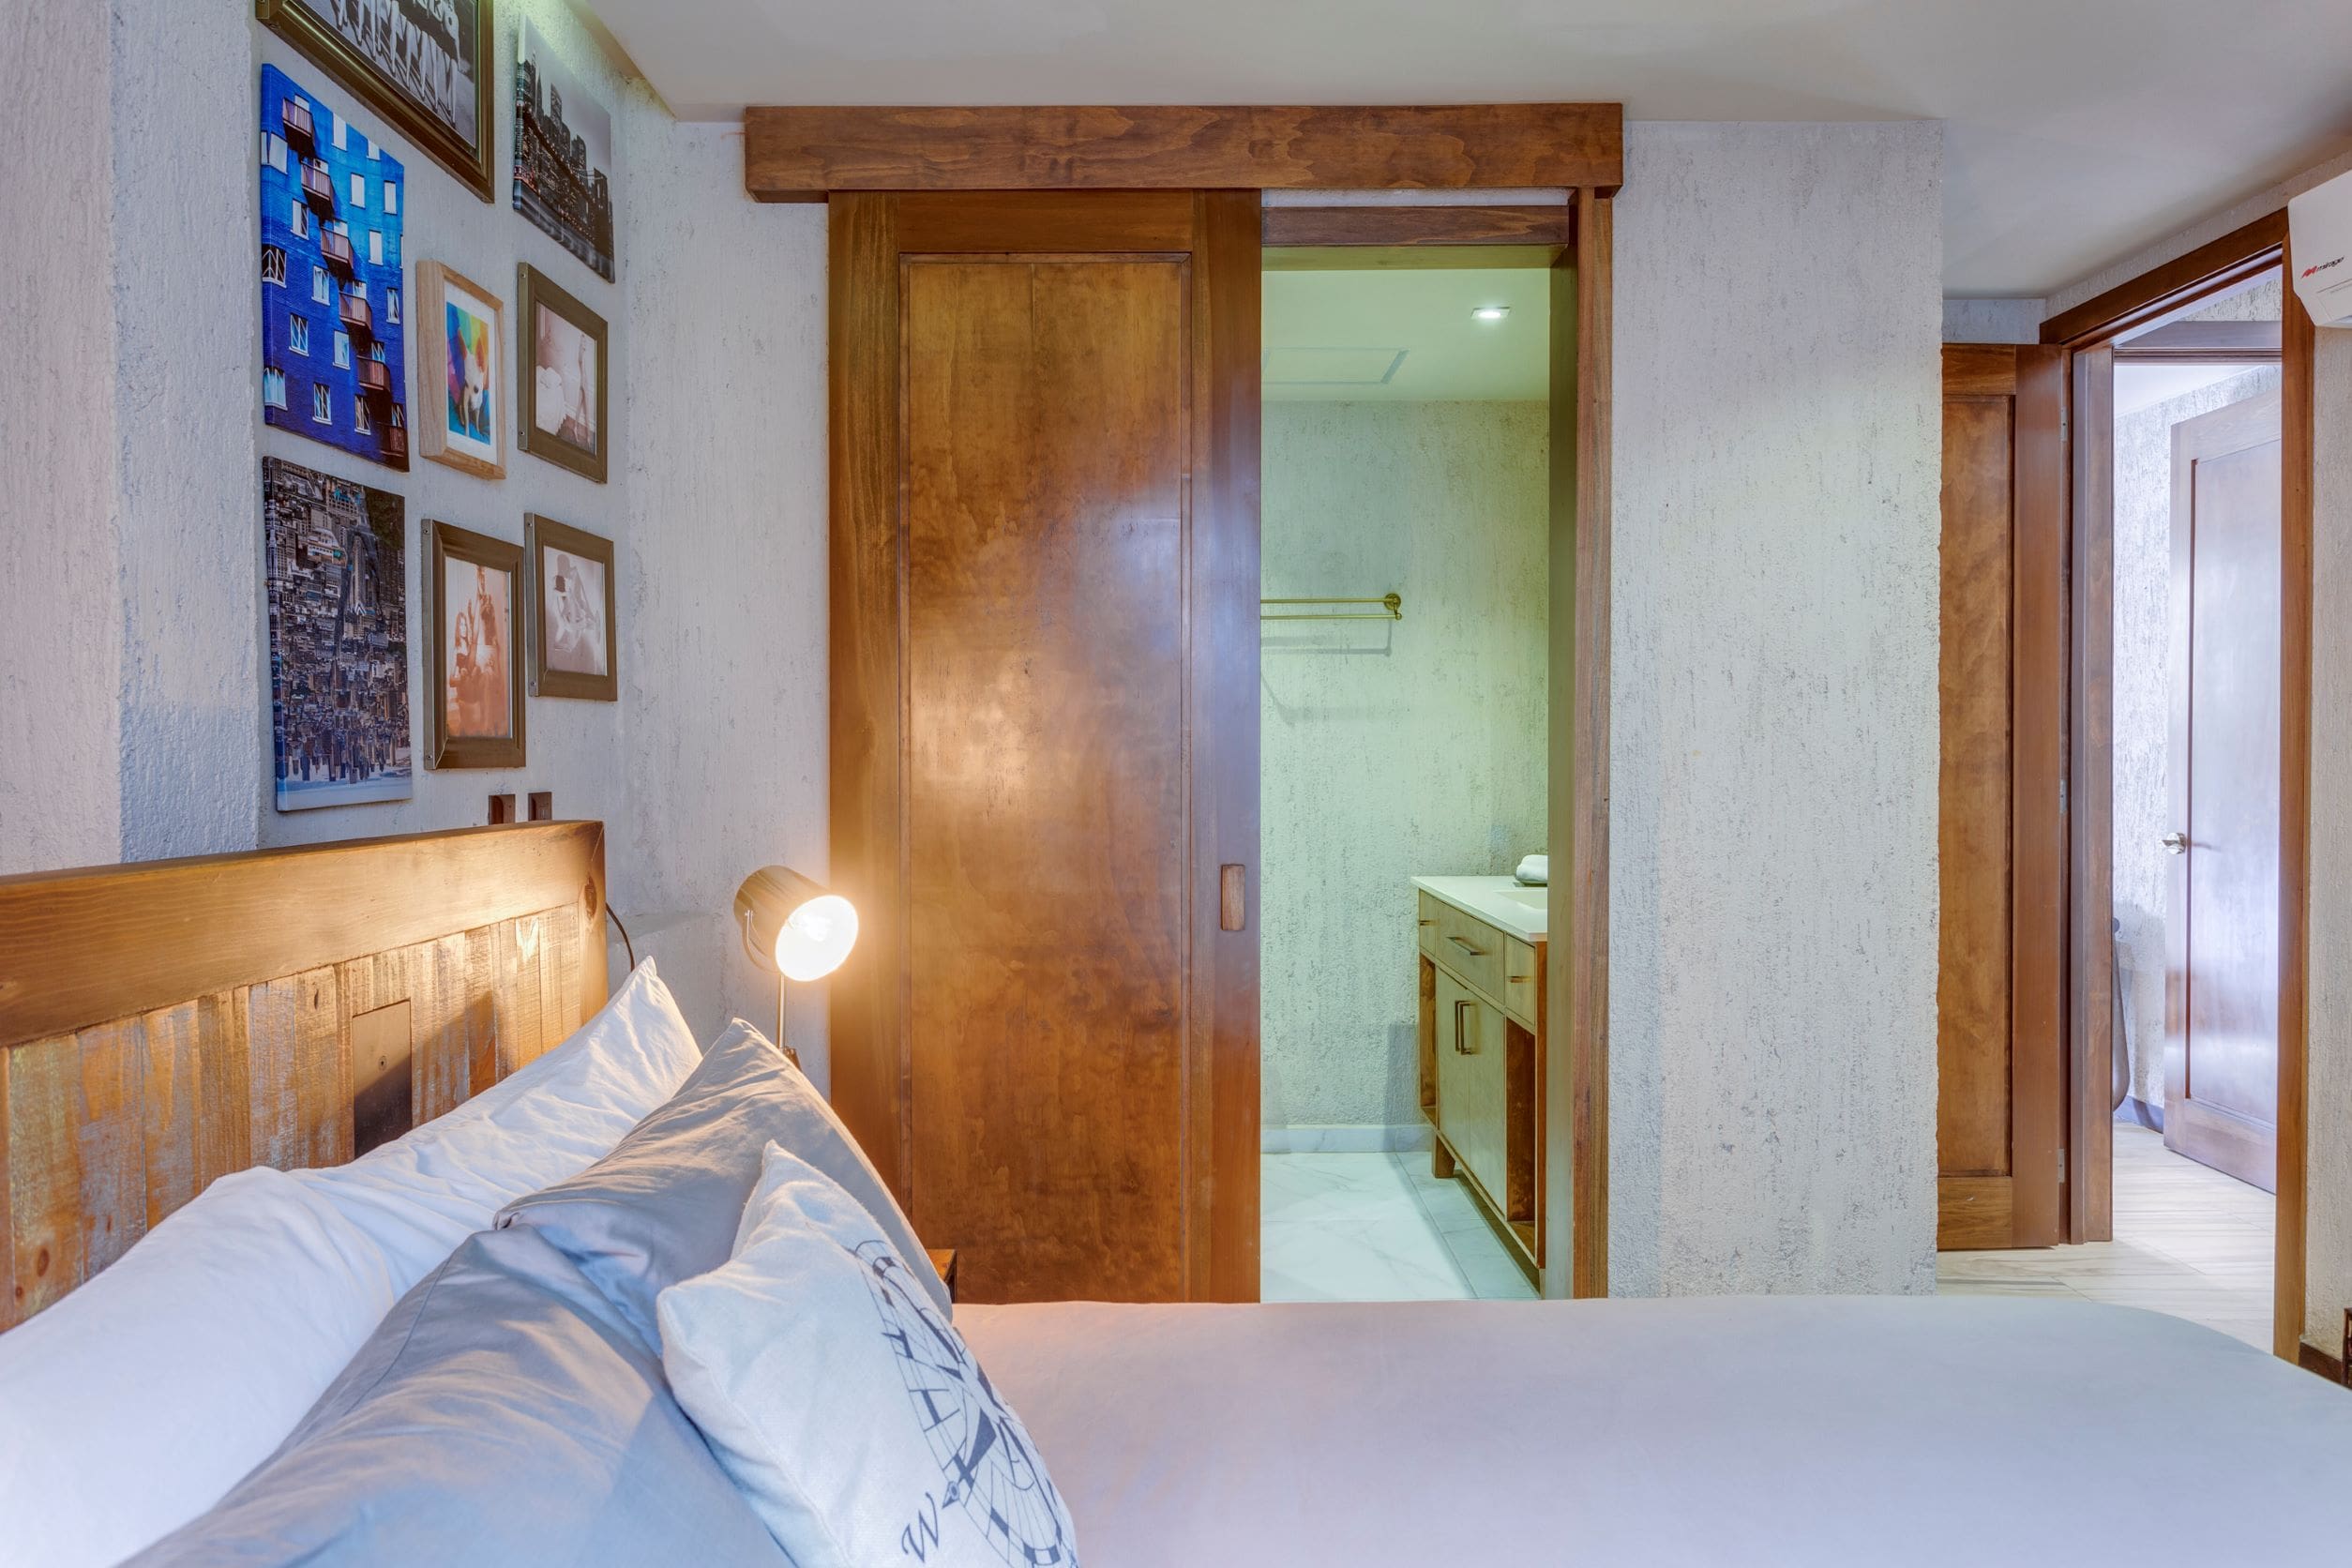 tulum real estate condos arthouse gf bedroom and private bathroom